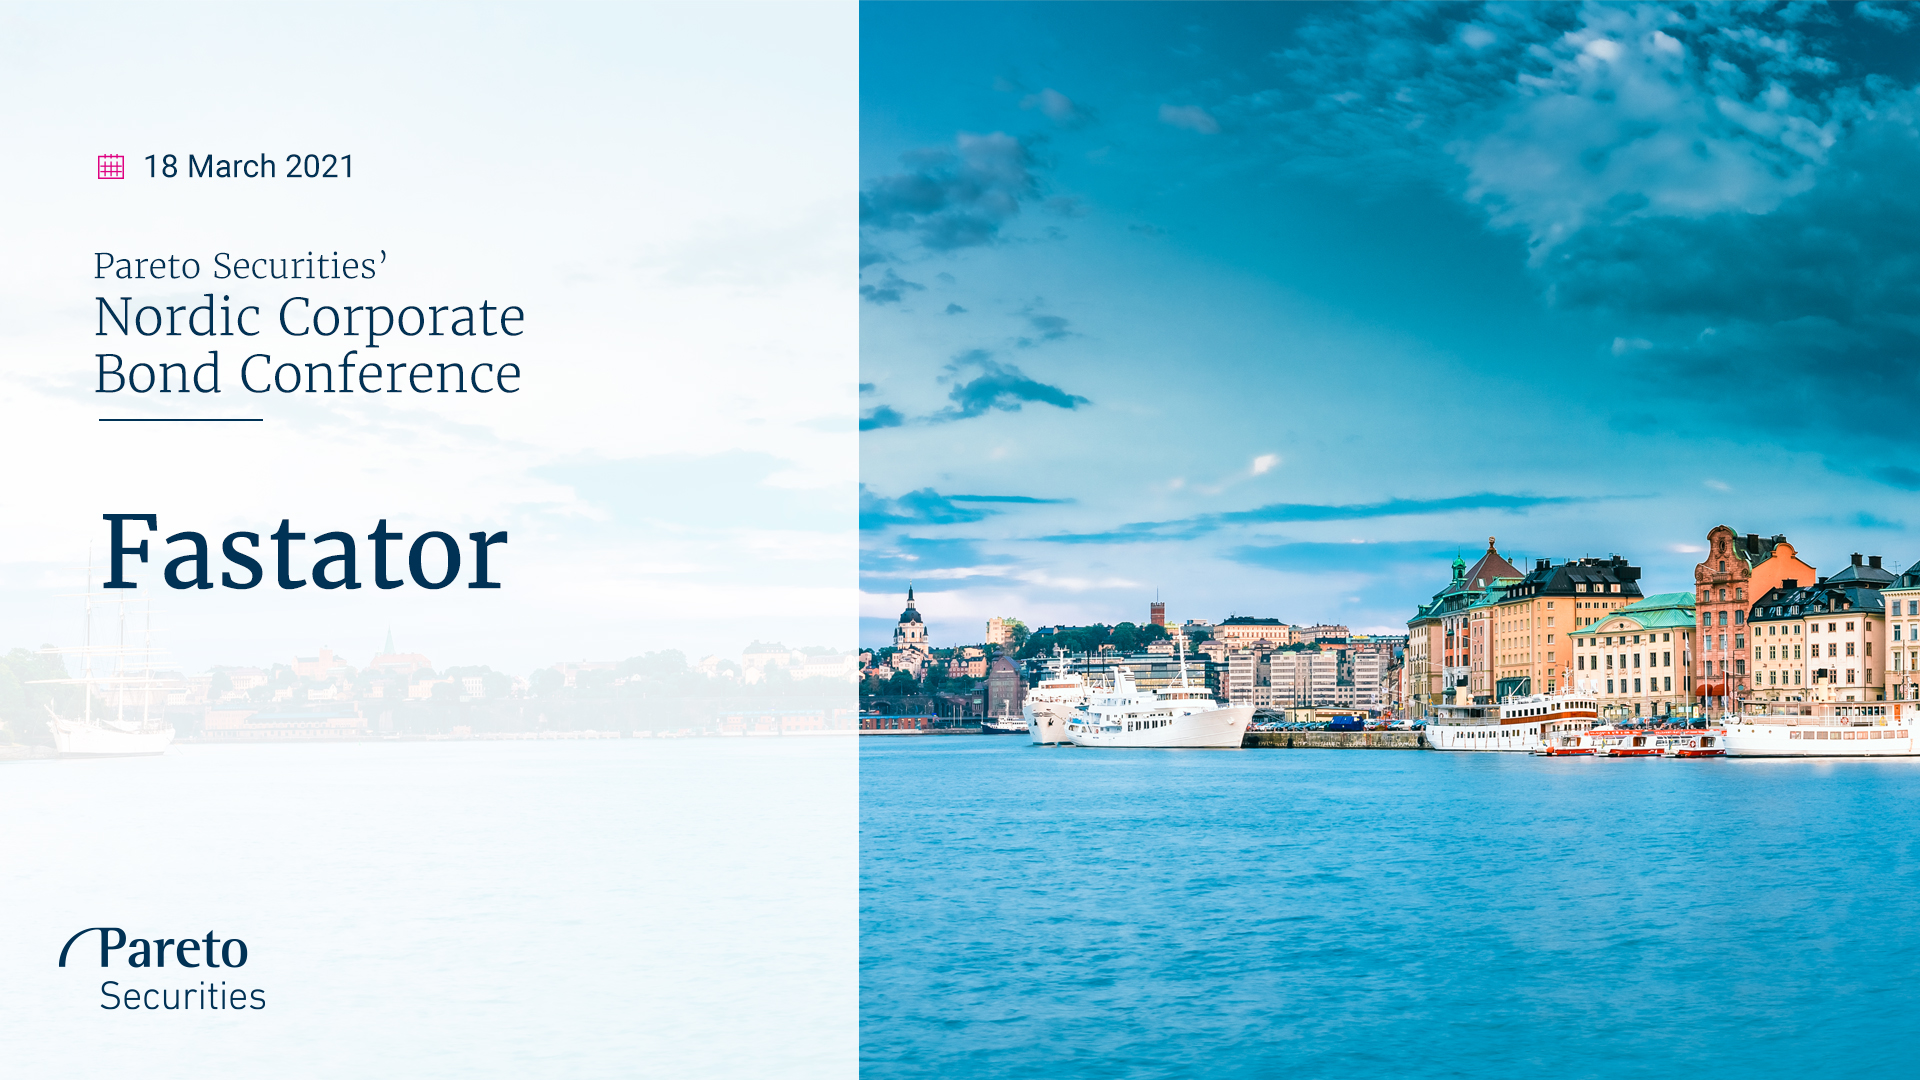  Fastator / Pareto Securities' Nordic Corporate Bond Conference